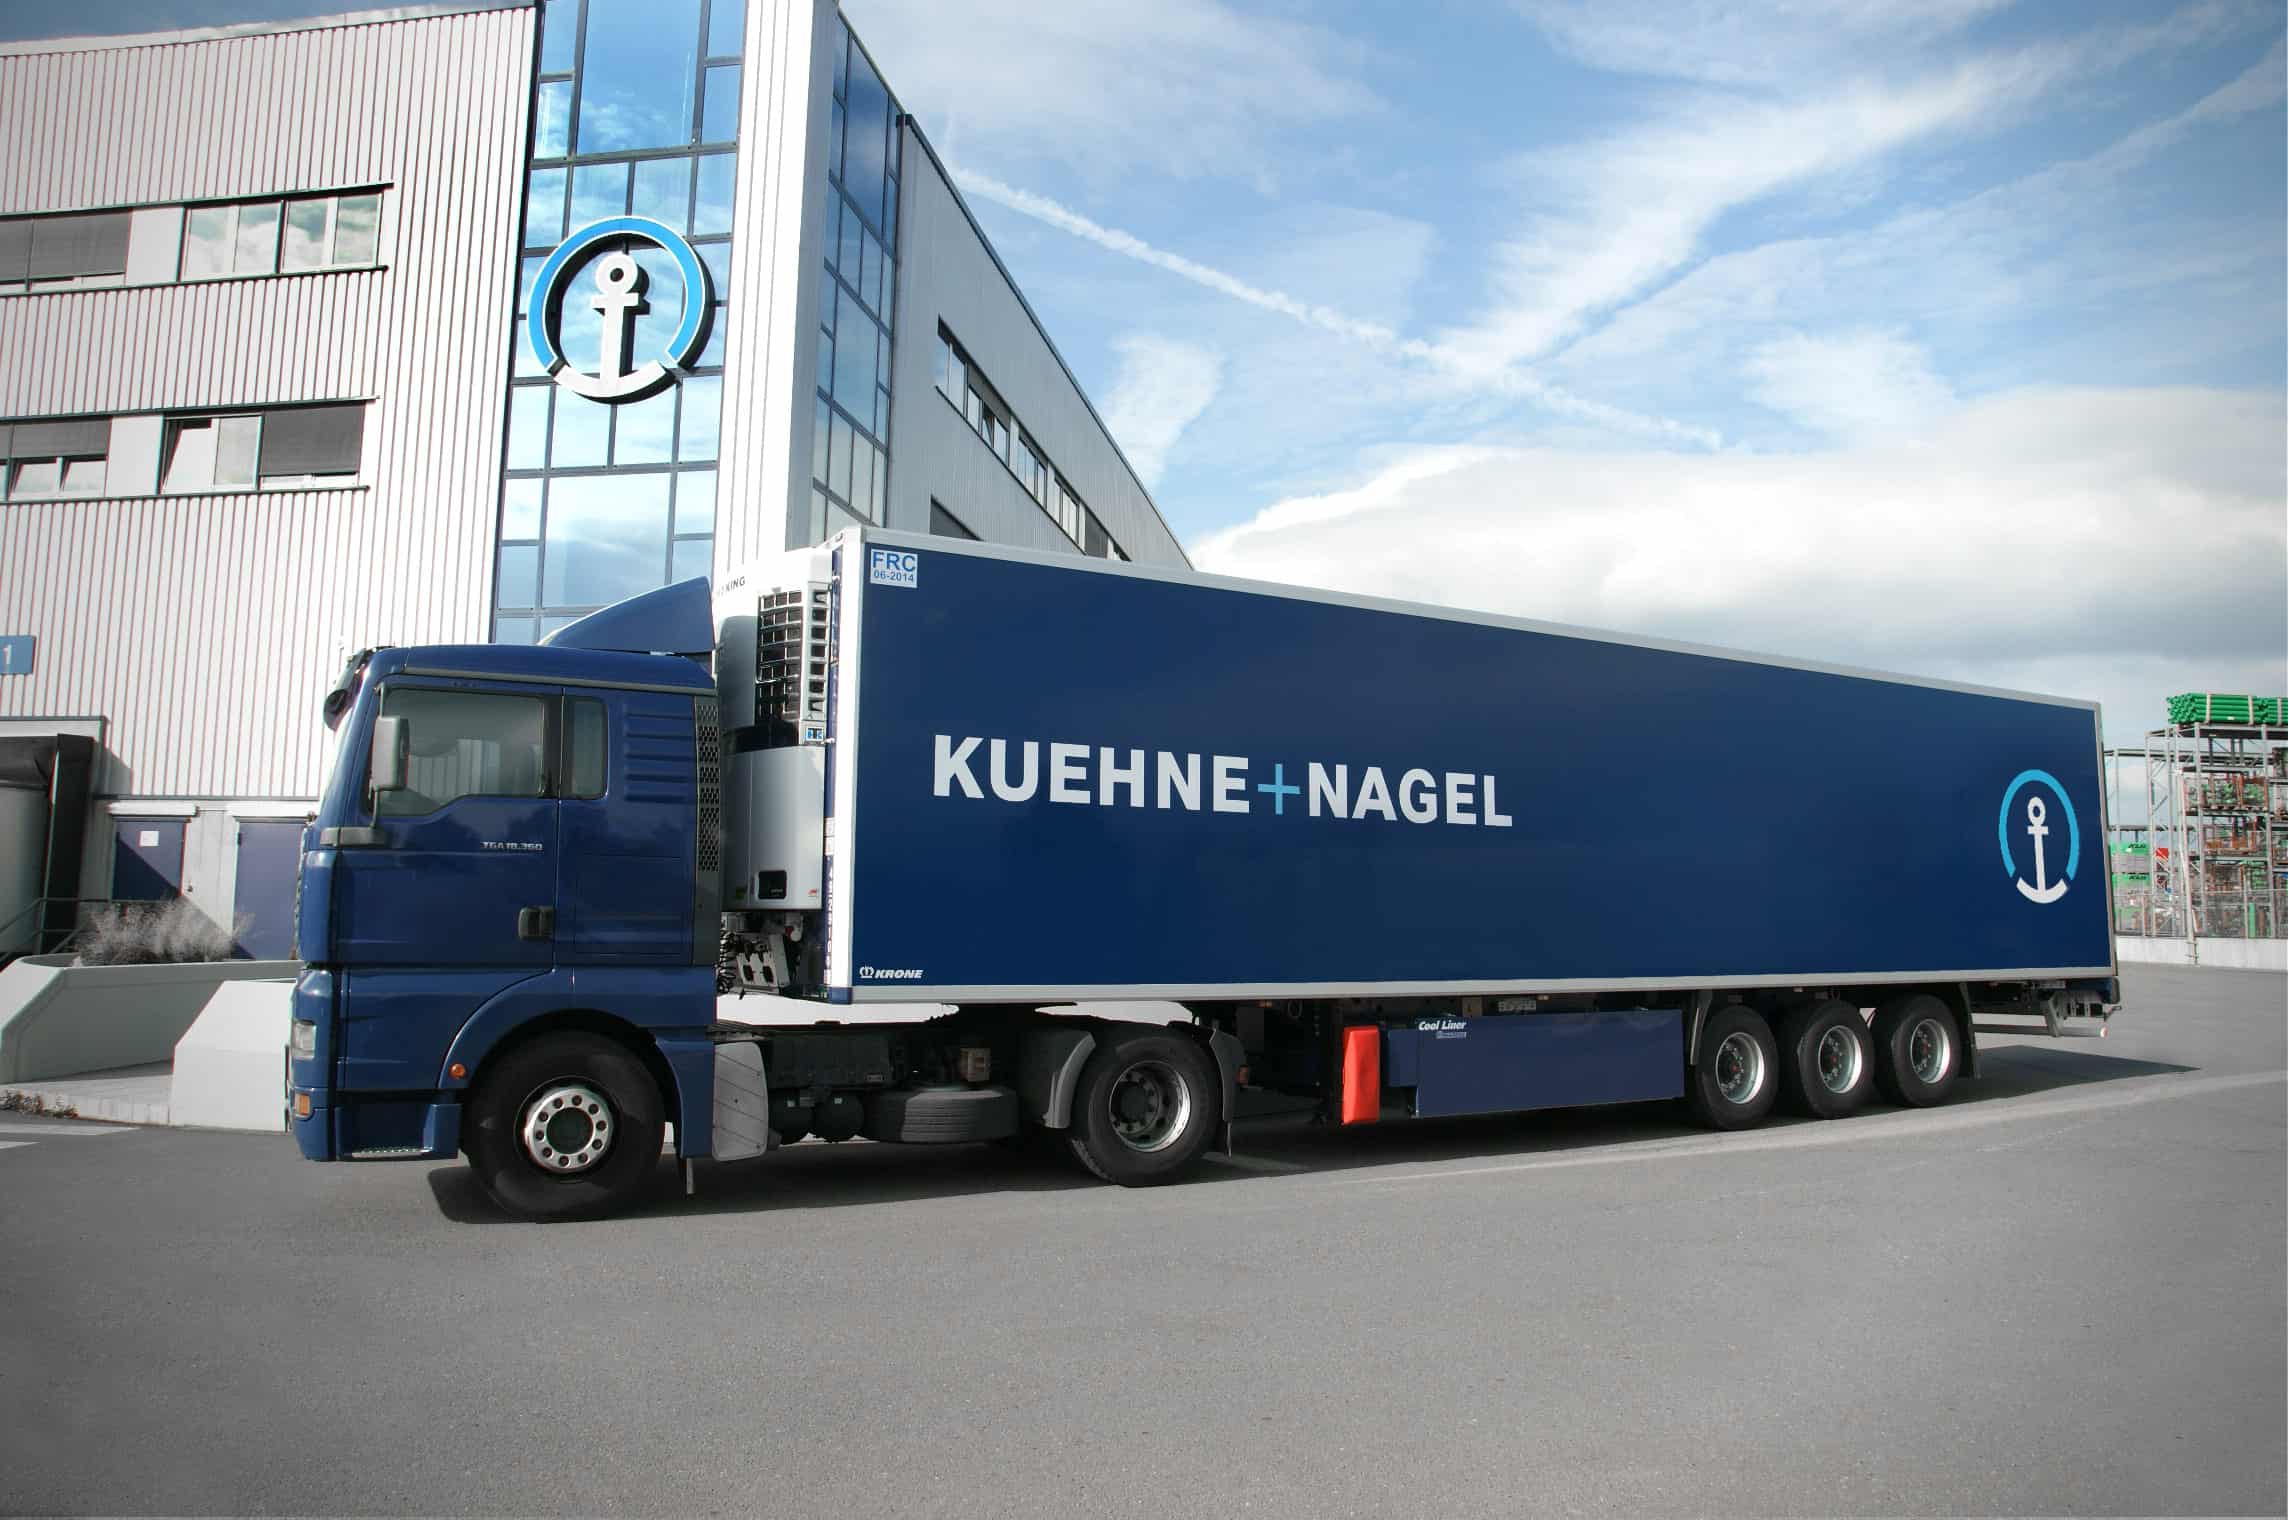 Kuehne + Nagel MediaMyne Internal communication solutions